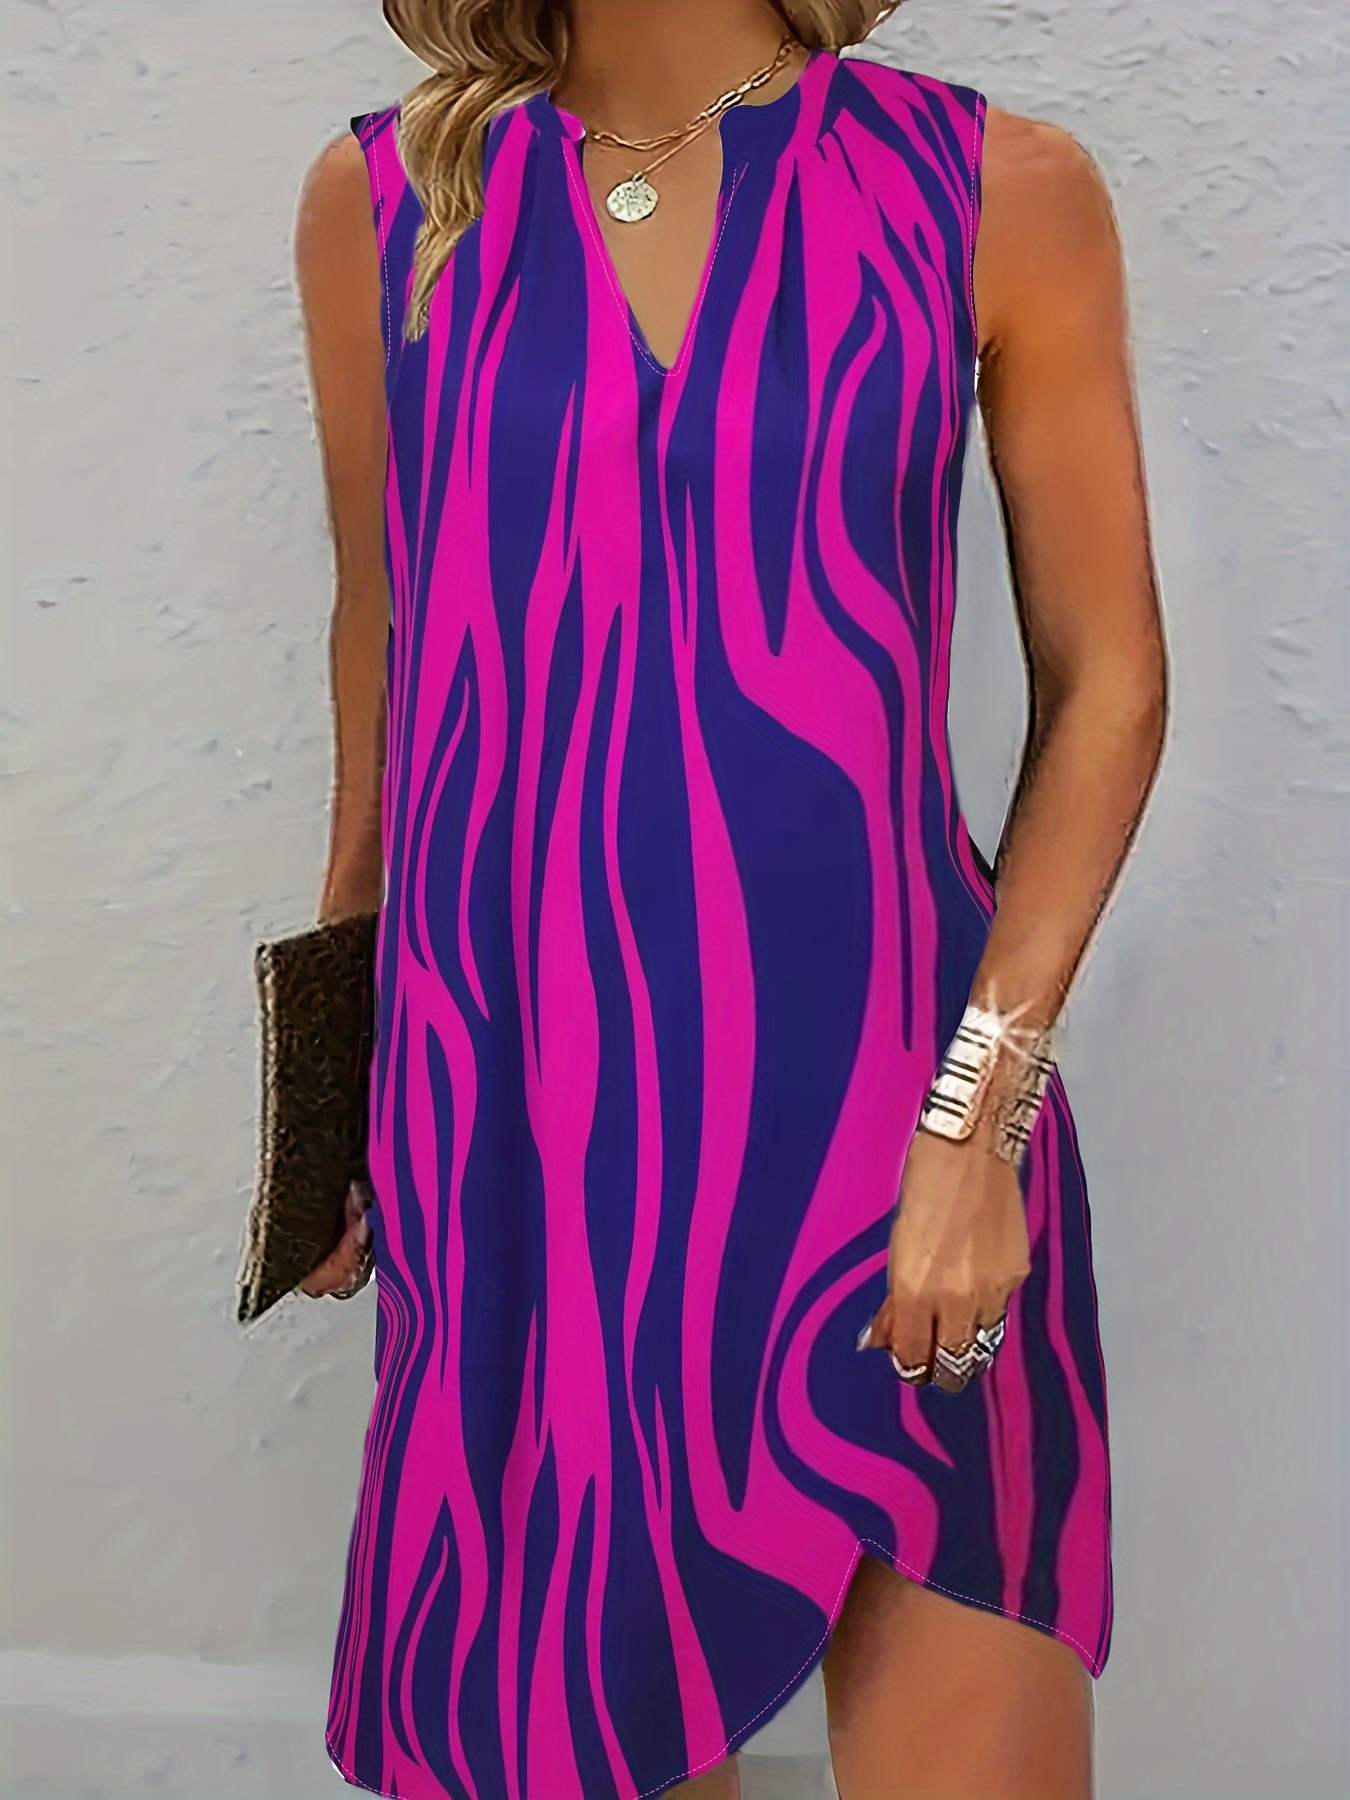 abstract ripple print dress casual v neck sleeveless dress womens clothing details 25